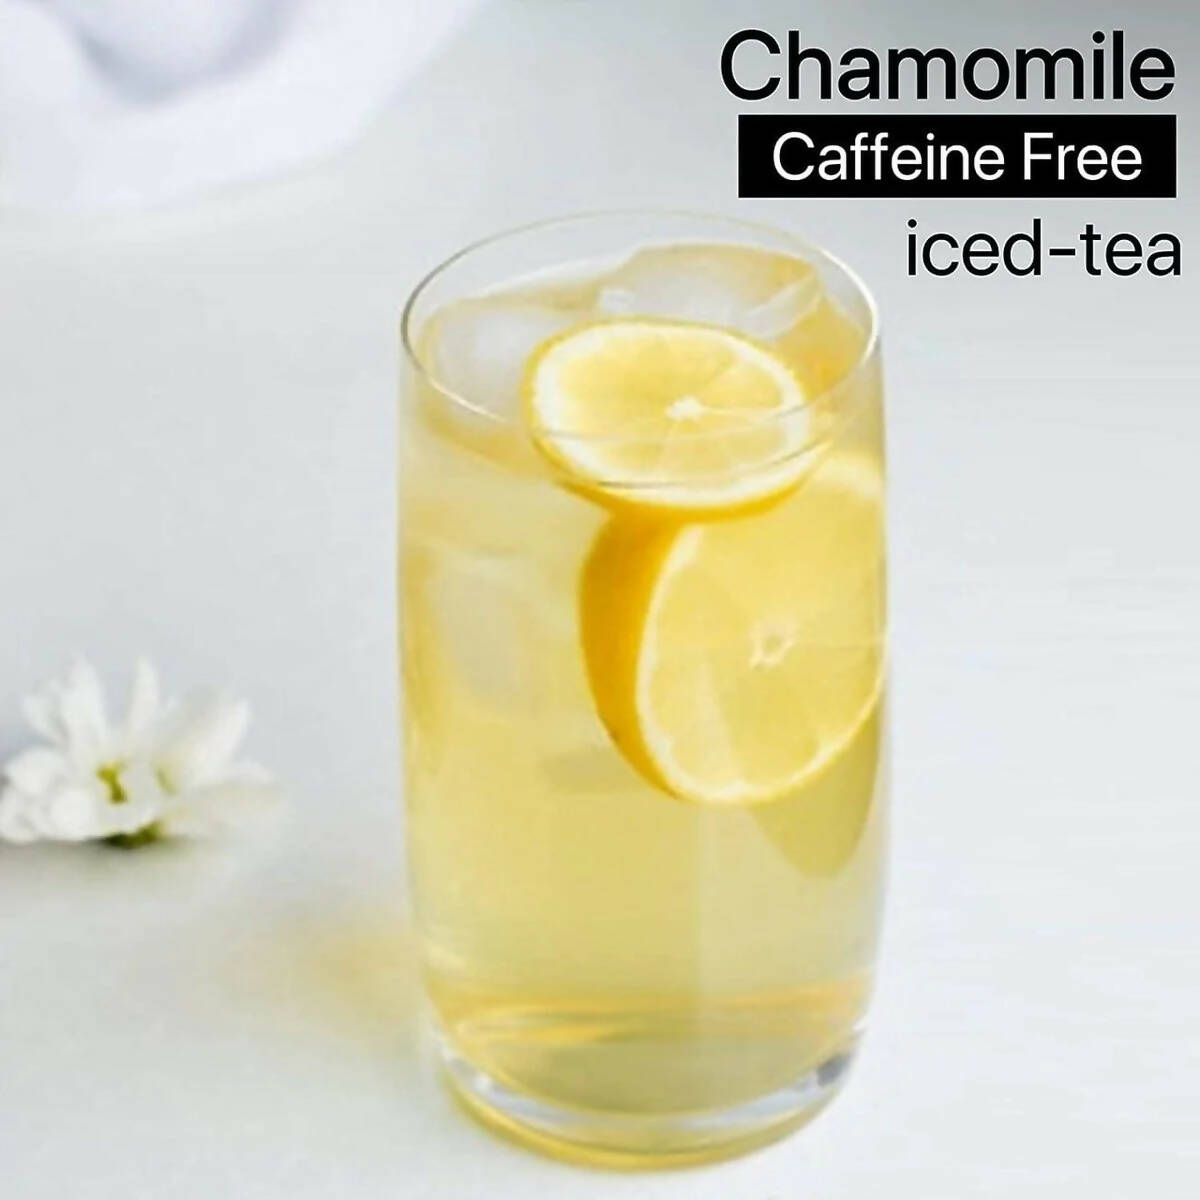 Blue Tea Organic Jasmine Green Tea - Distacart